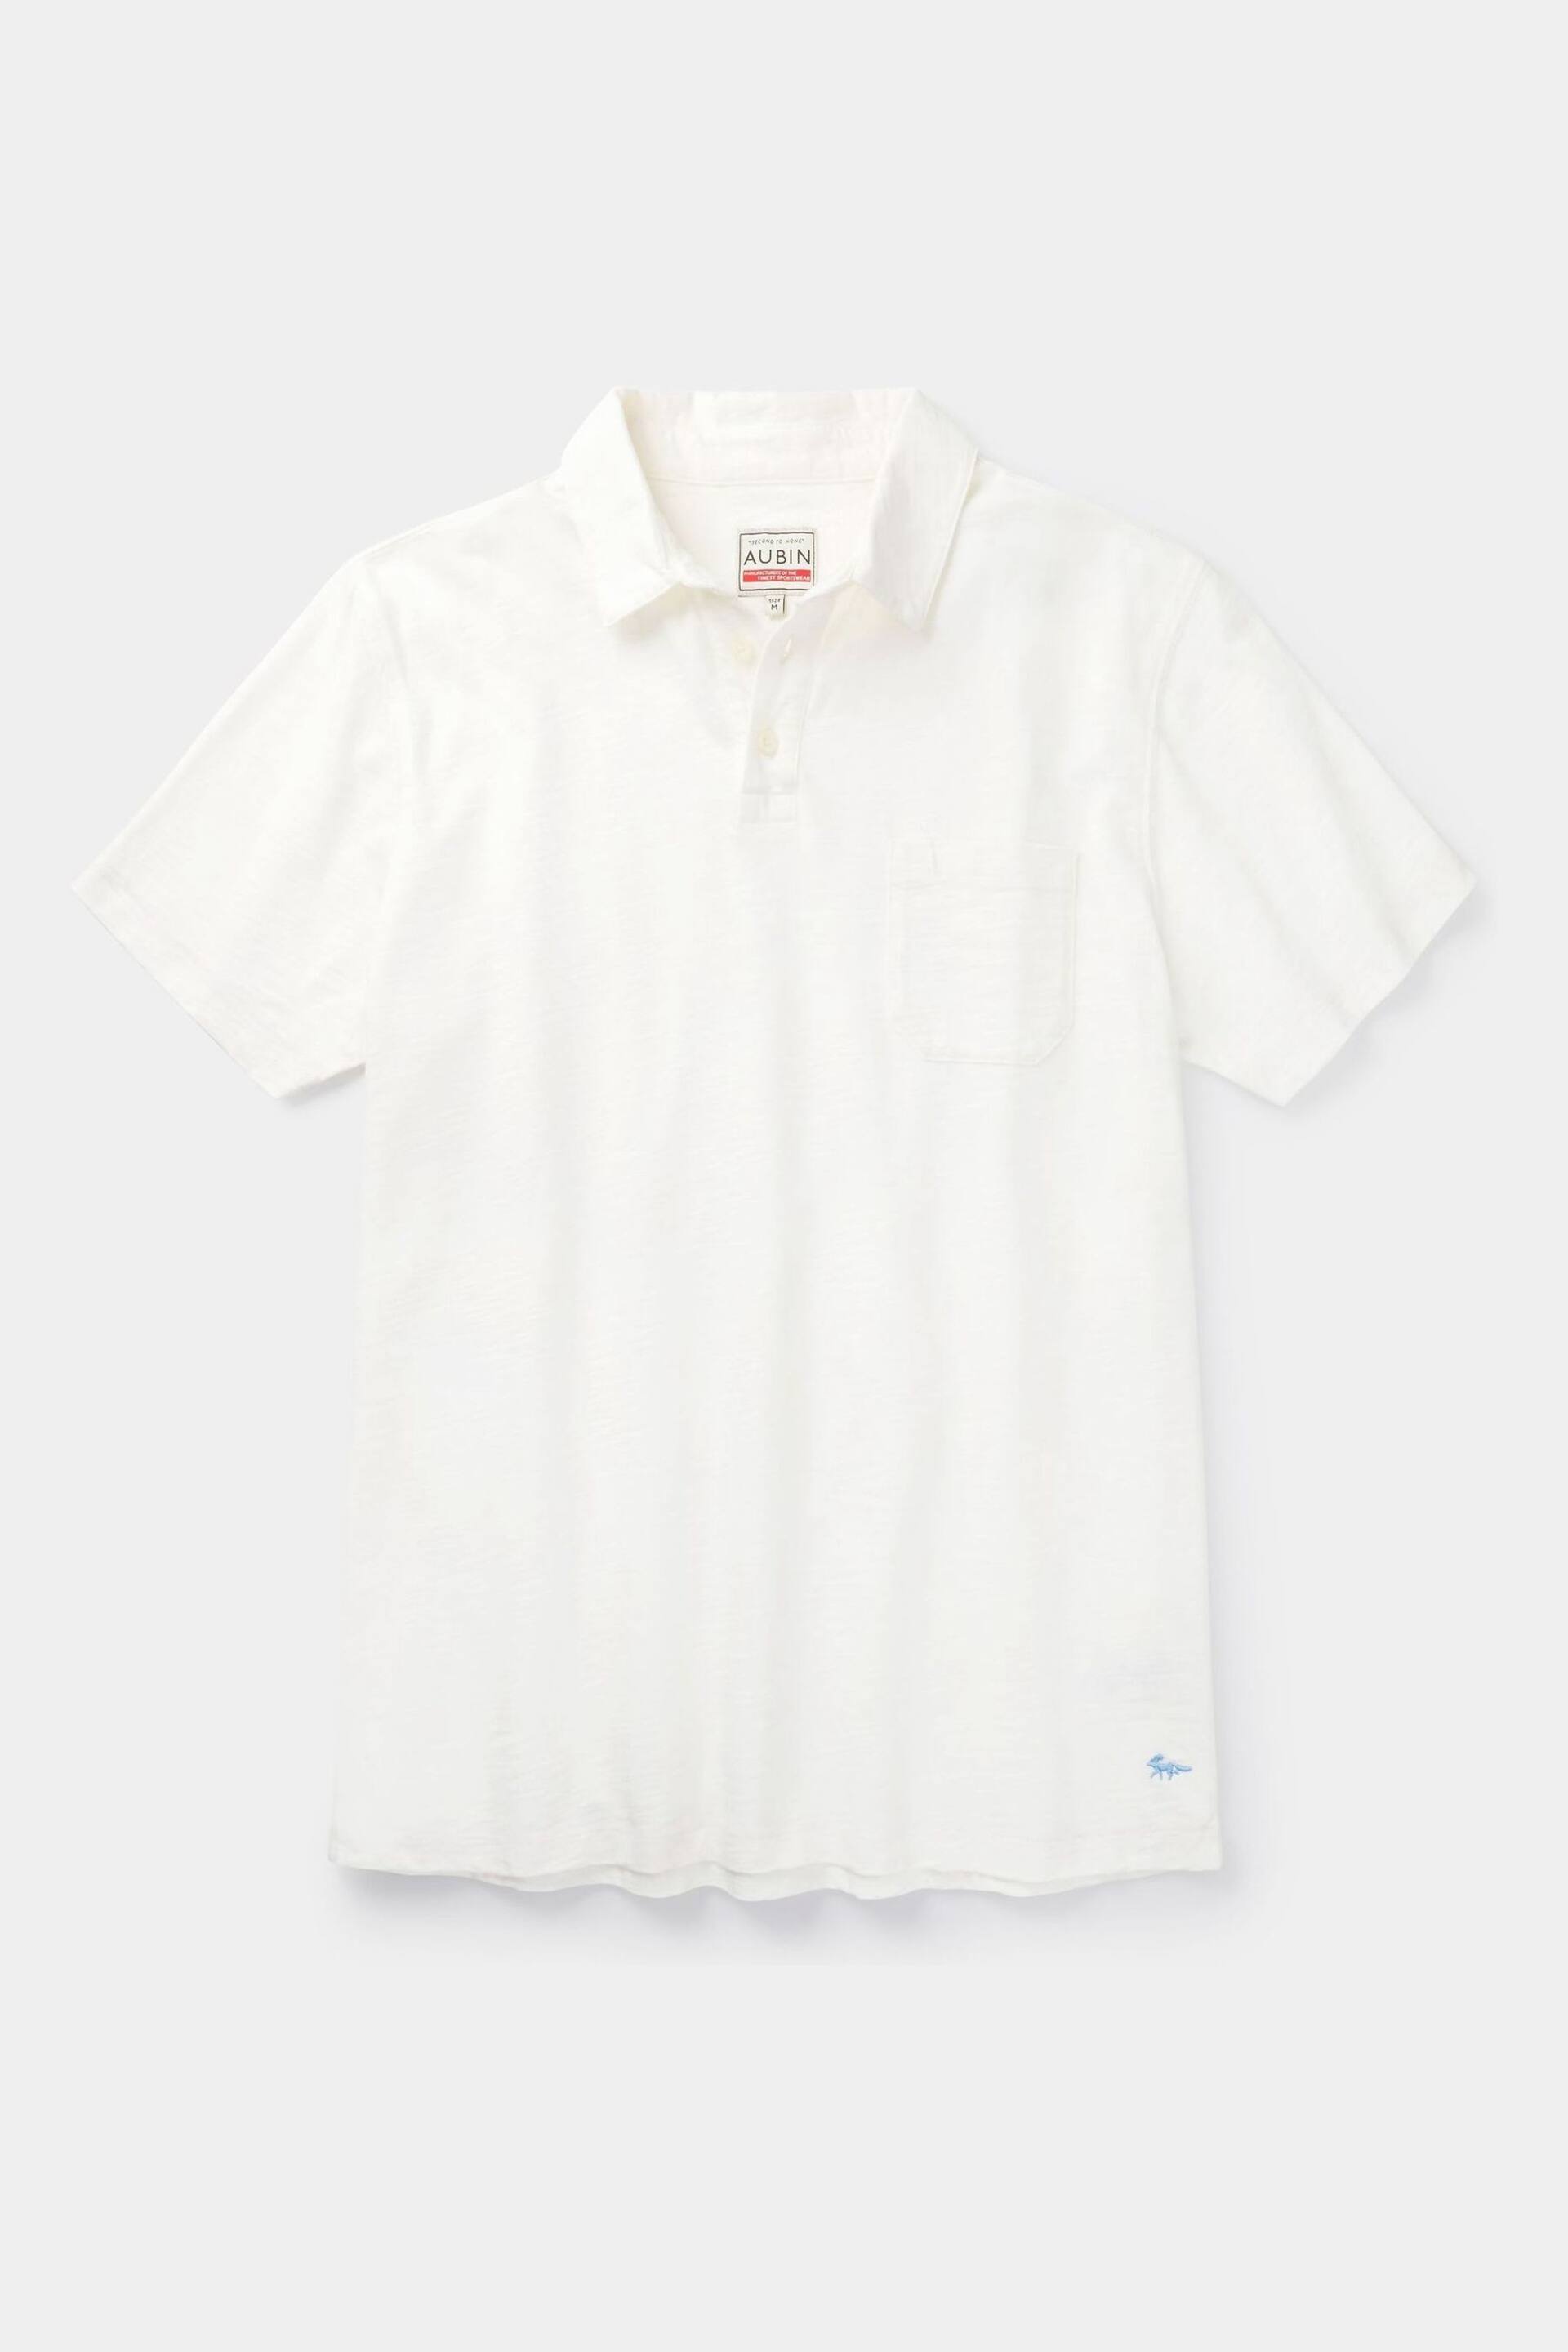 Aubin Claxby Slub Polo Shirt - Image 6 of 7